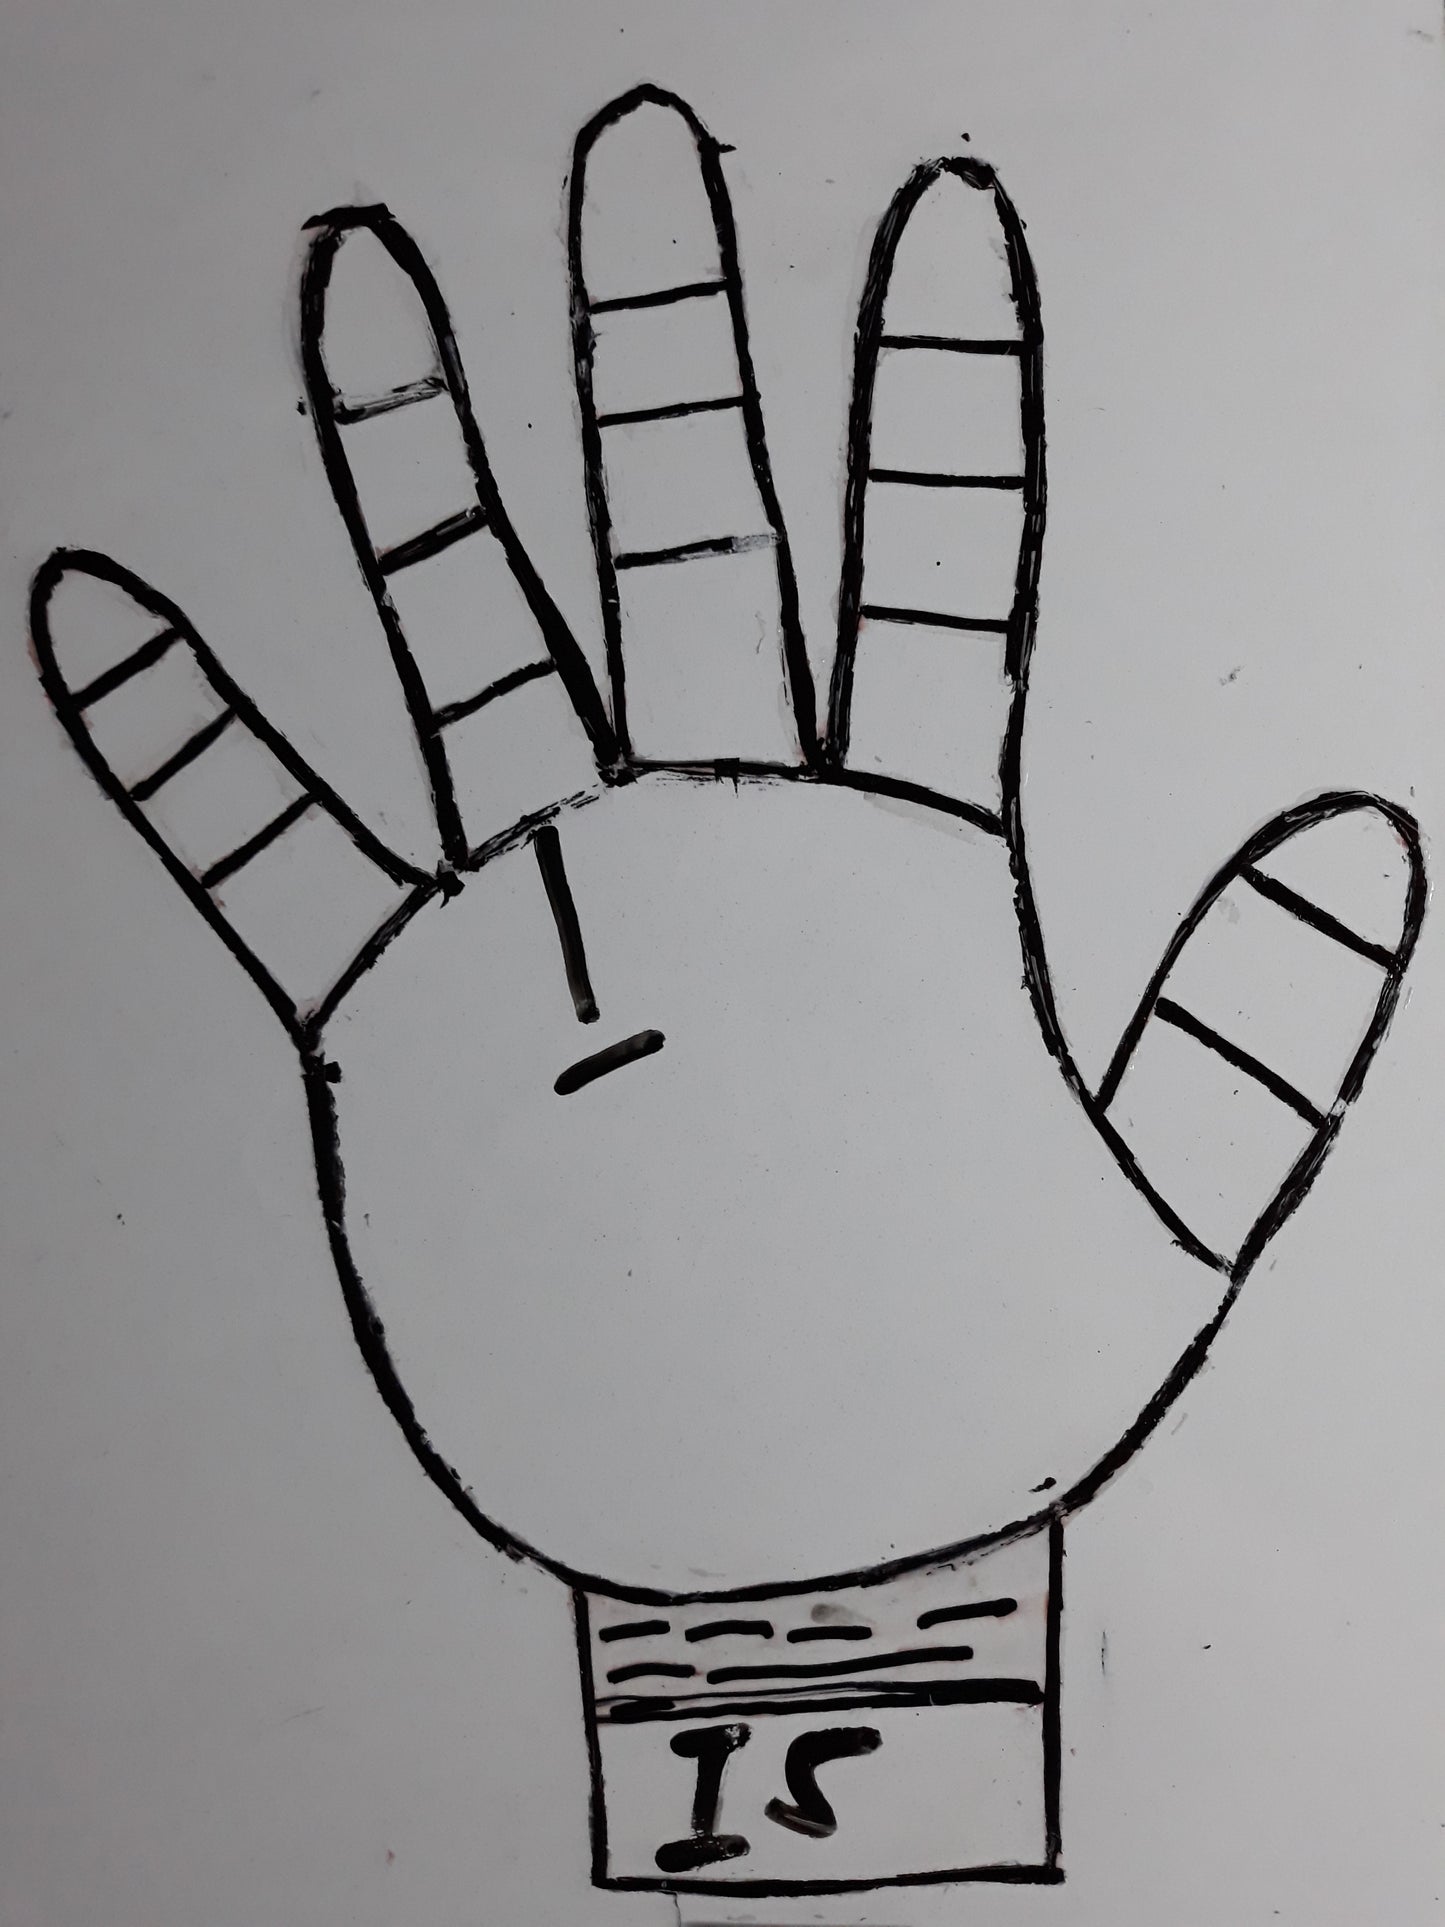 I5 SCULPTOR HAND